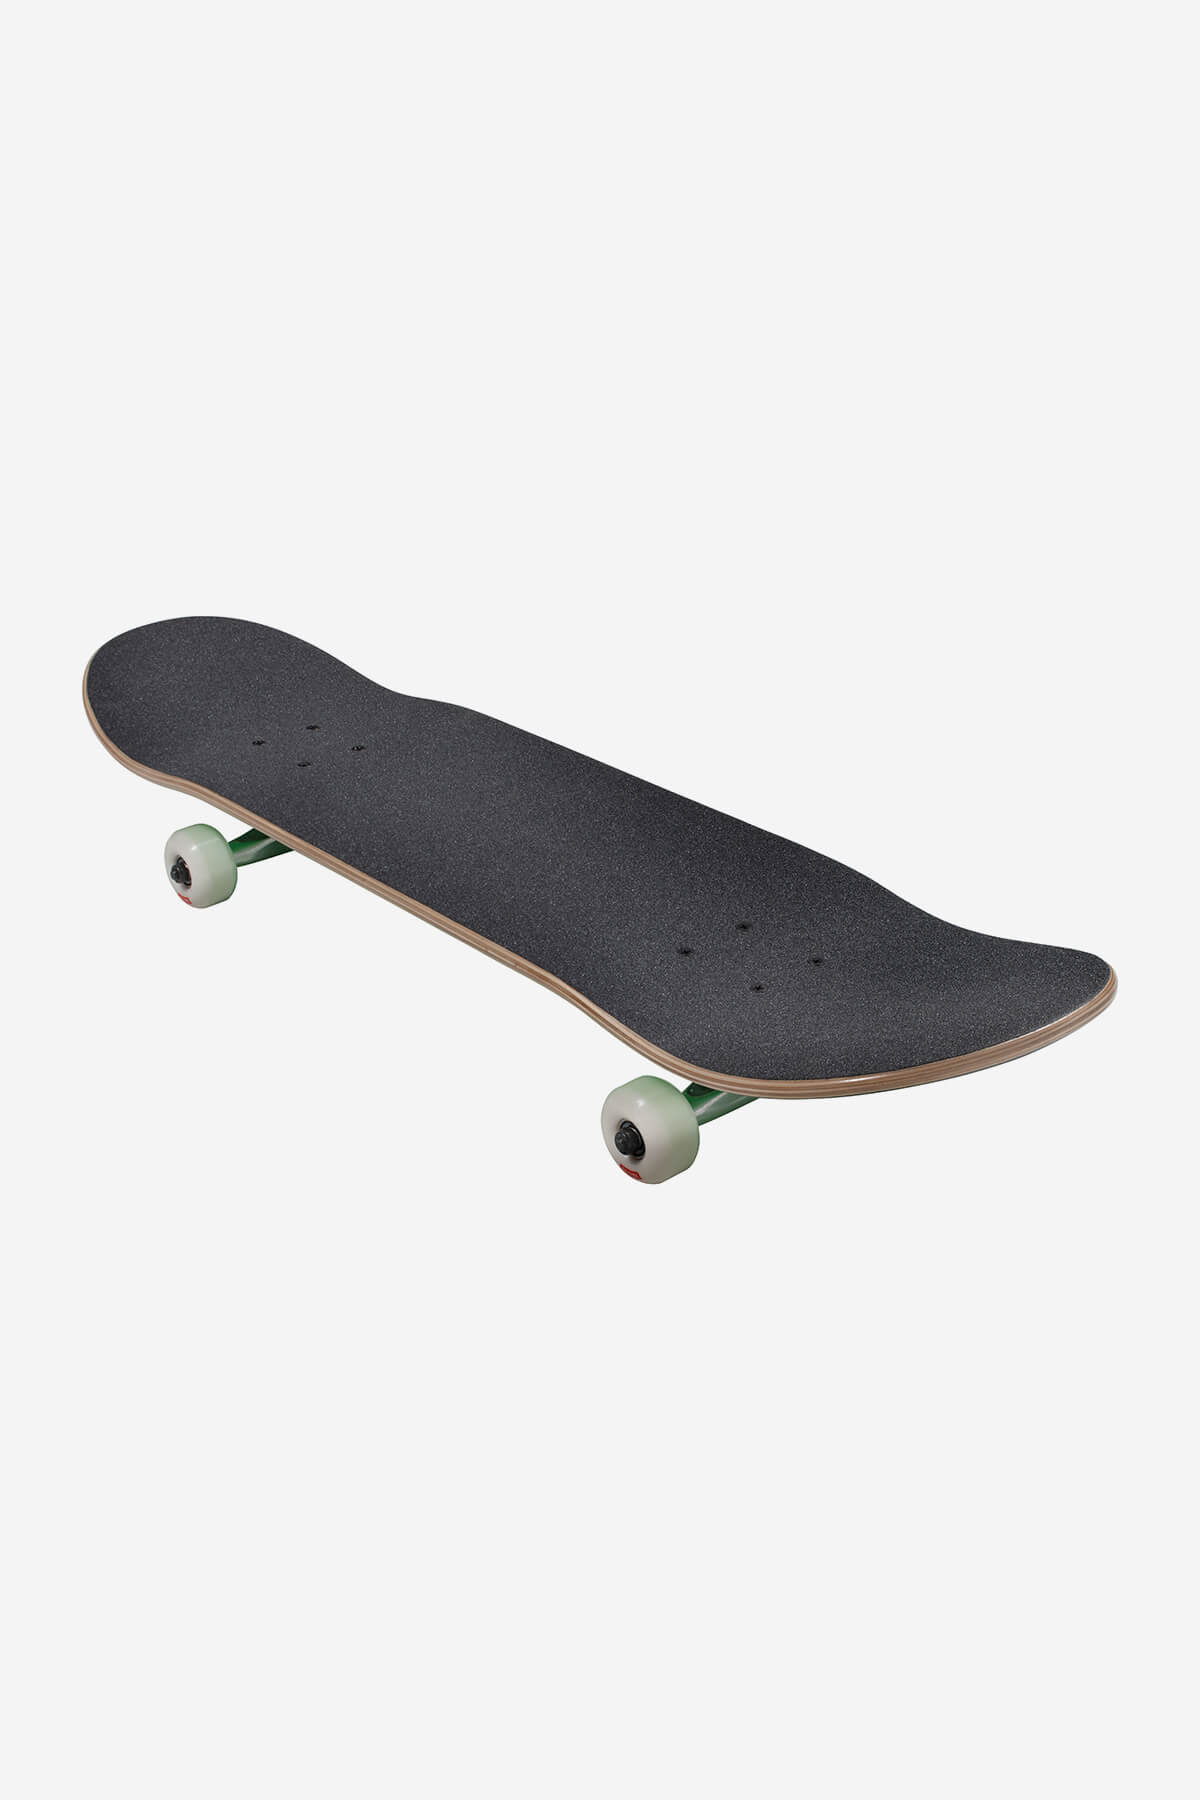 Globe Skateboard completeert Goodstock 8.0" Compleet Skateboard in NEON GREEN